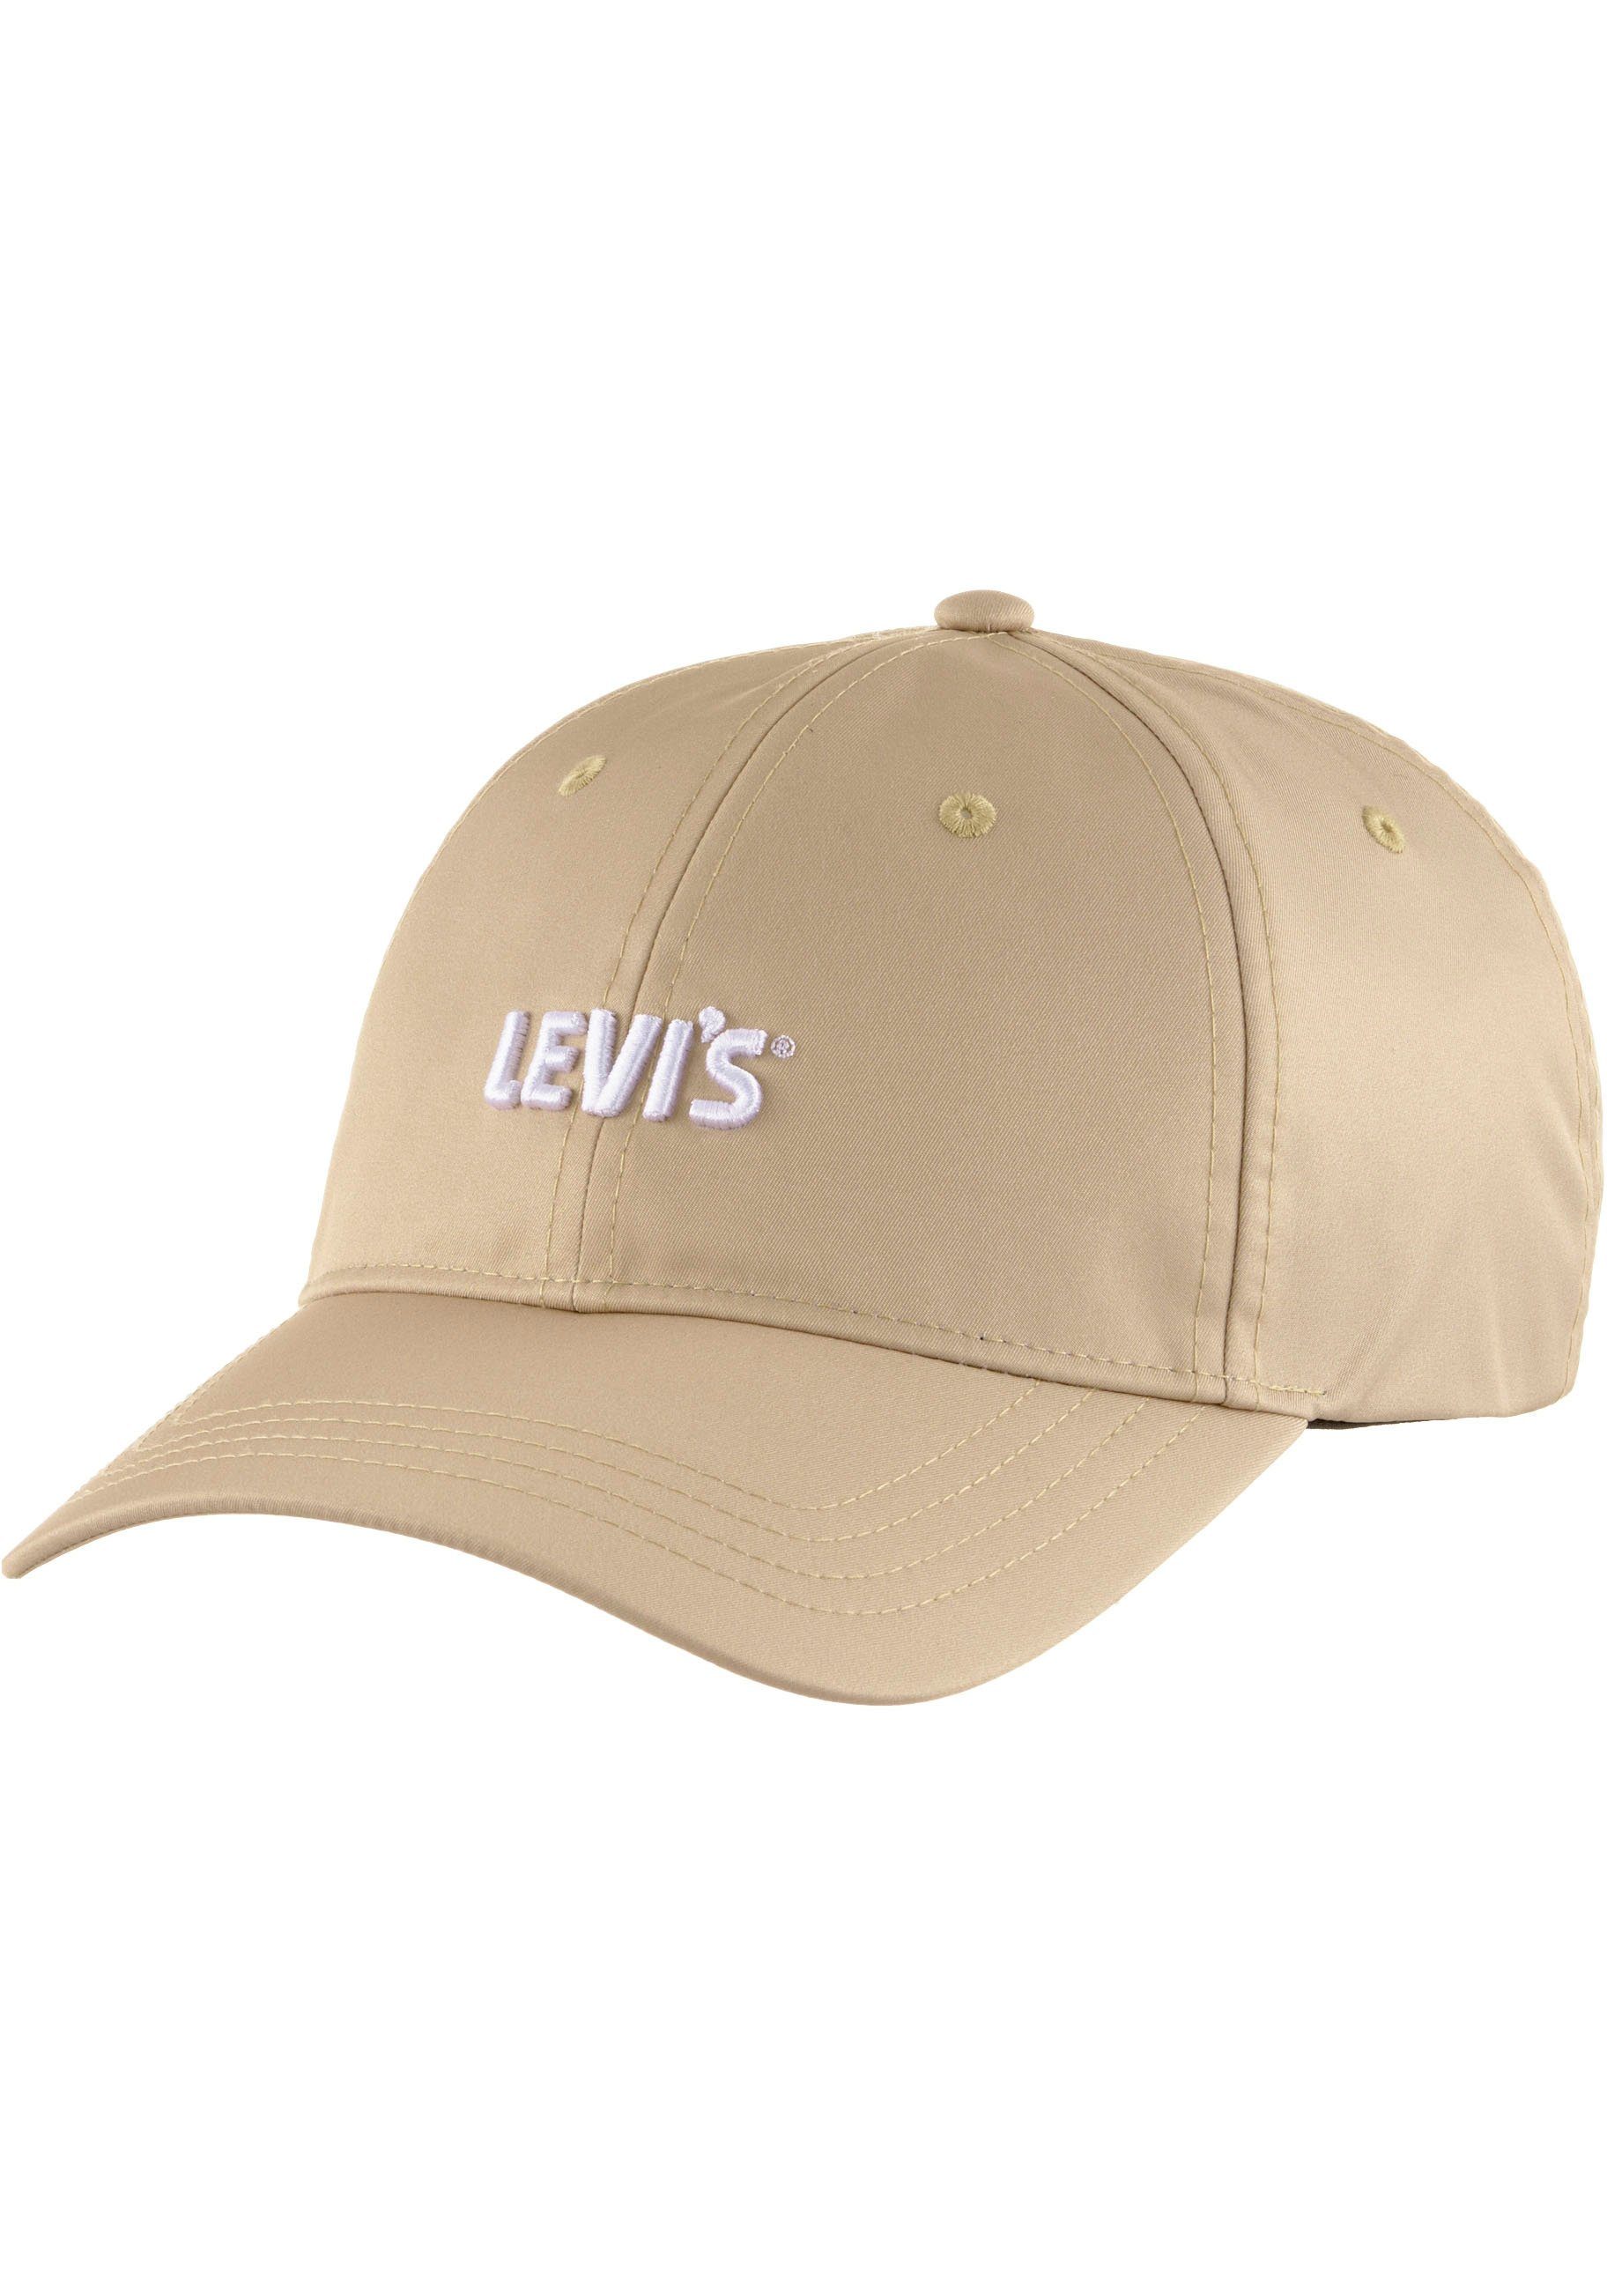 Levi's® Baseball Cap Gold Tab natural tan | Baseball Caps